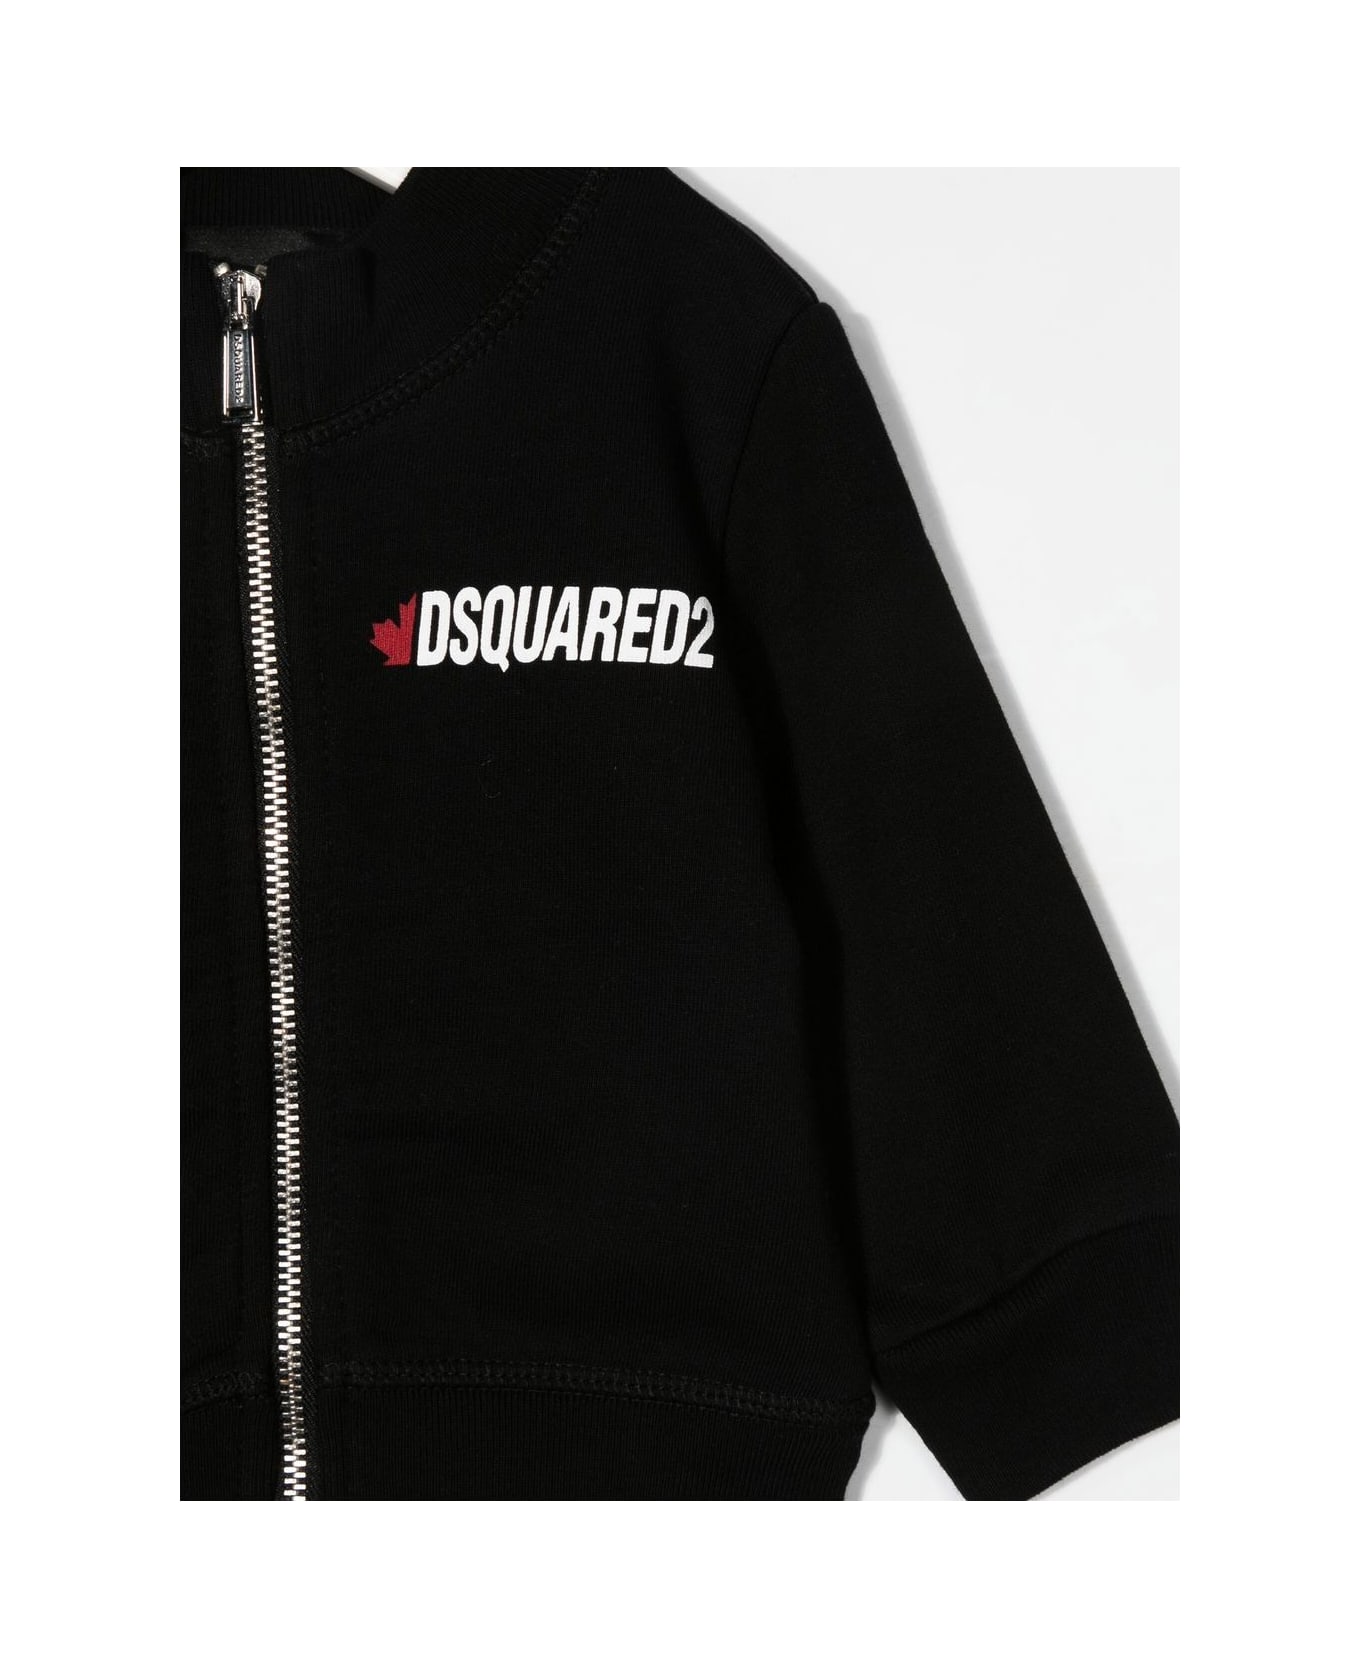 Dsquared2 Baby Black Sweatshirt With Zip And White Printed Logo - Black